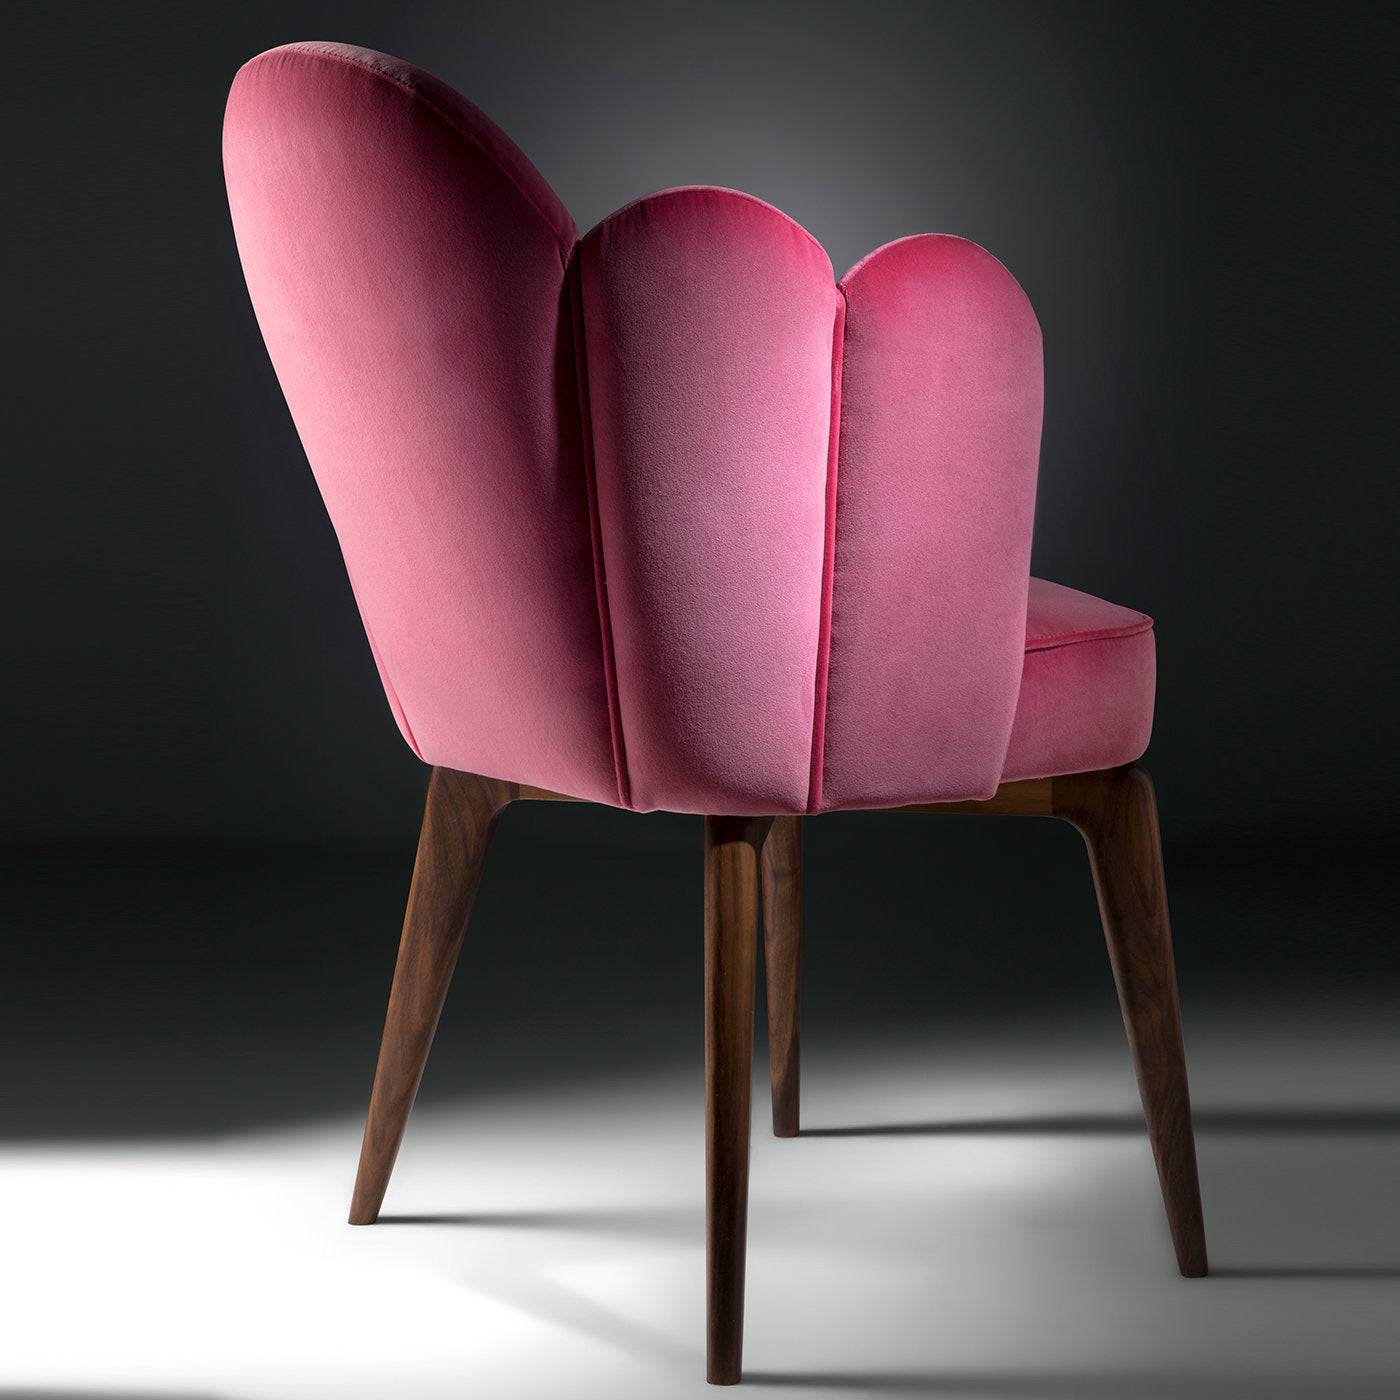 Small Flora chair by Giovanna Azzarello  - Alternative view 2